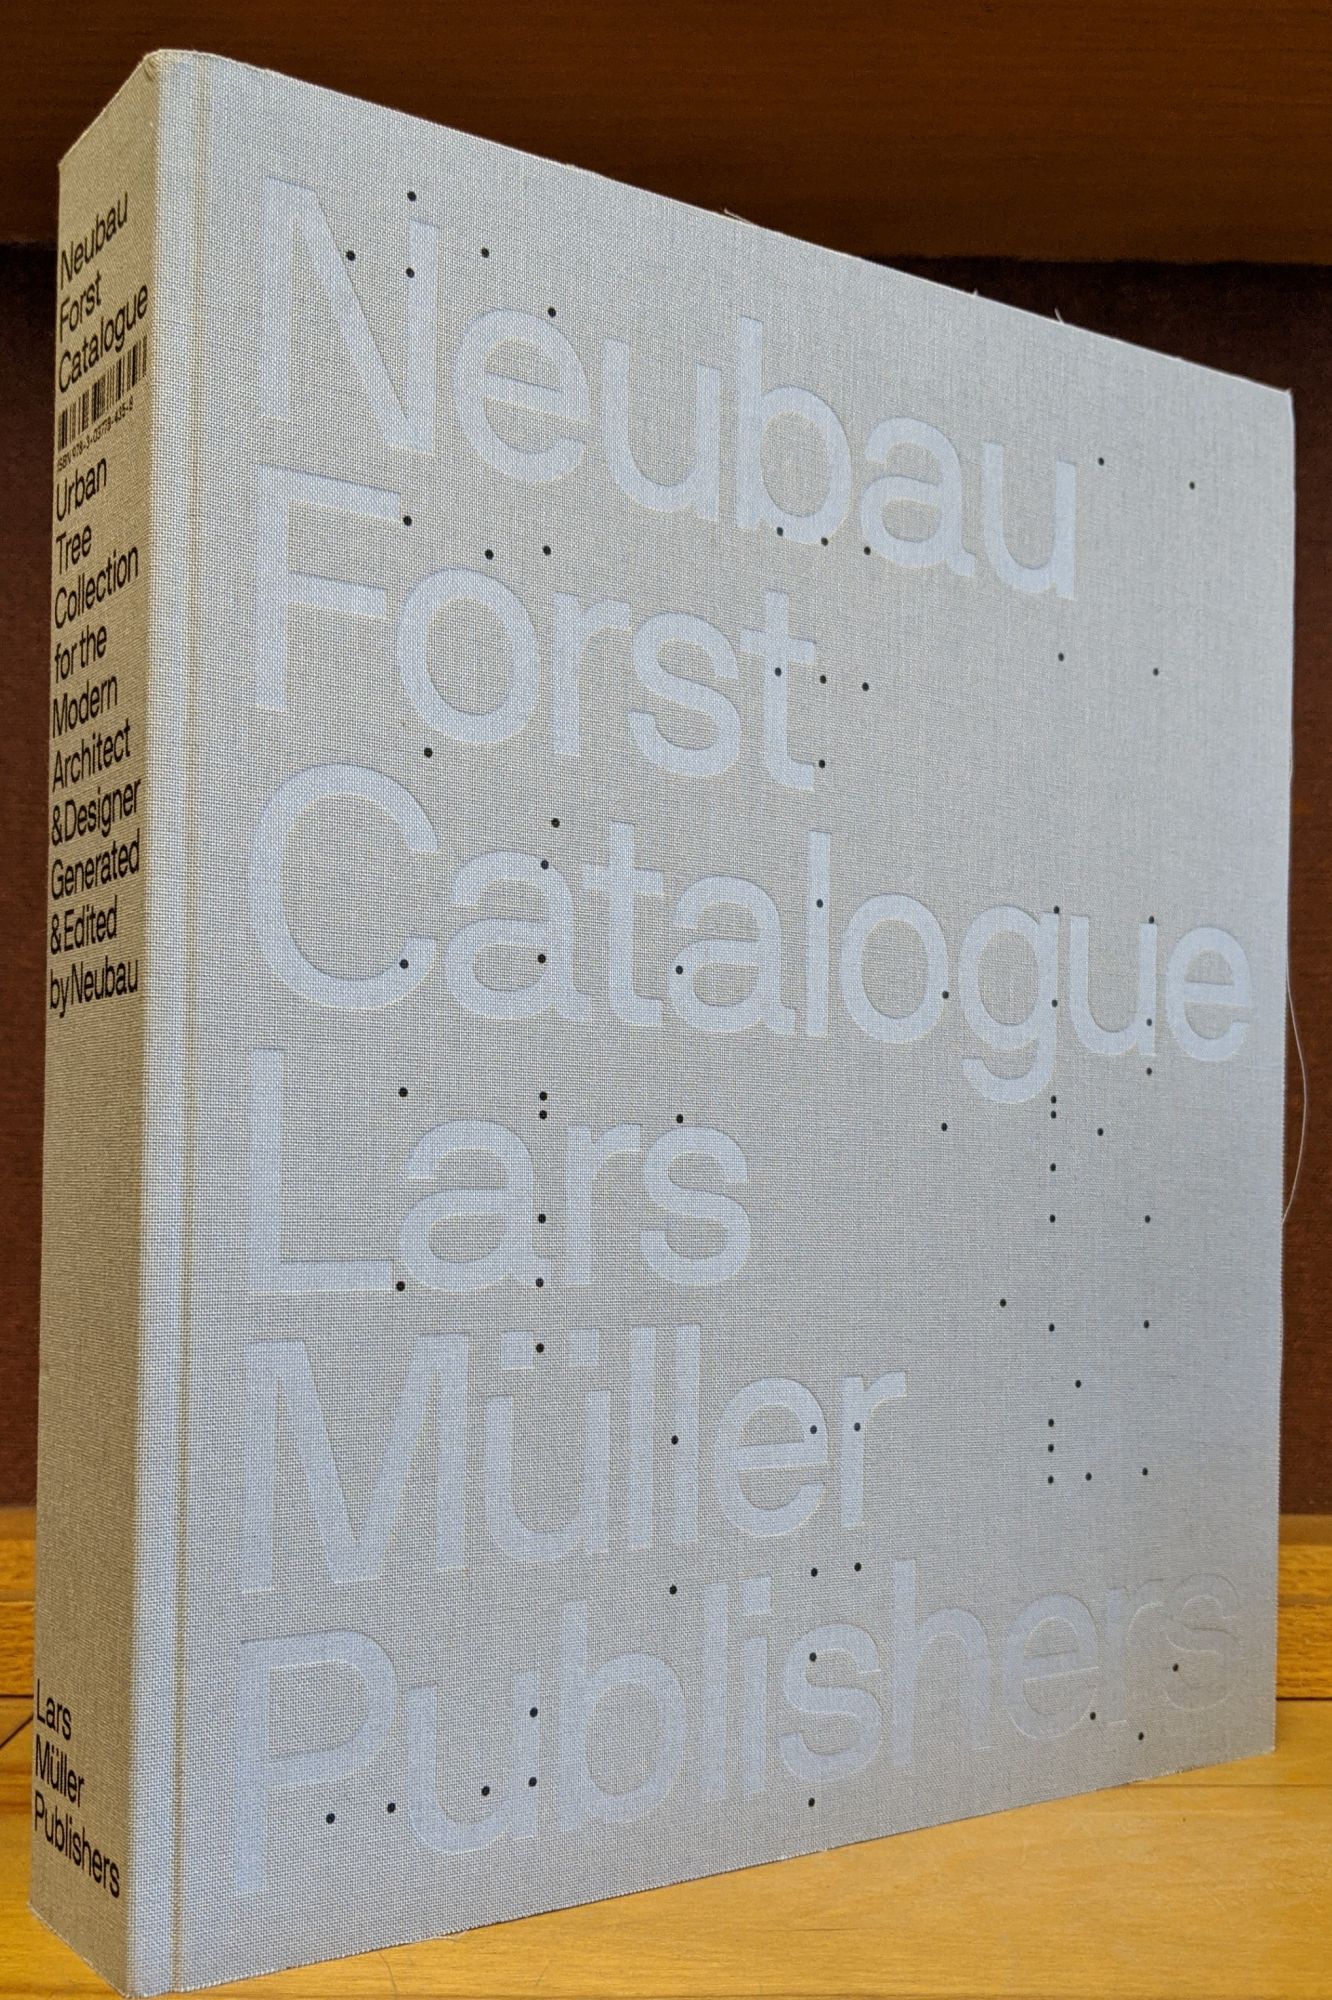 Neubau Forst Catalogue - Stefan Gandl, Neubau (Firm), Letraset Deutschland